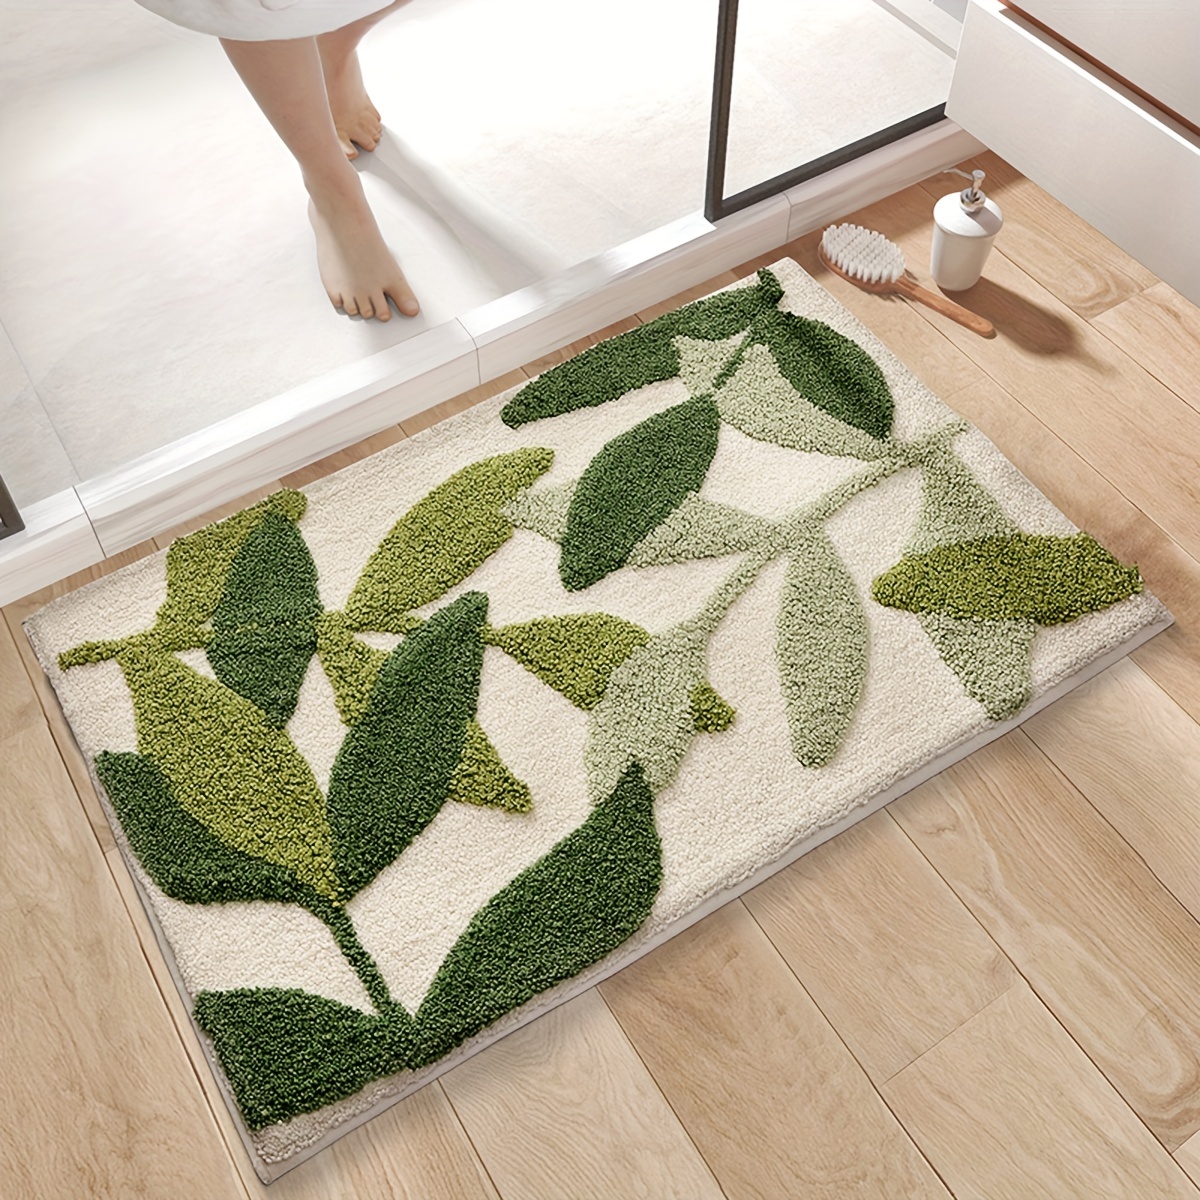 Marvell-alfombra antideslizante para suelo, cojín de tira larga